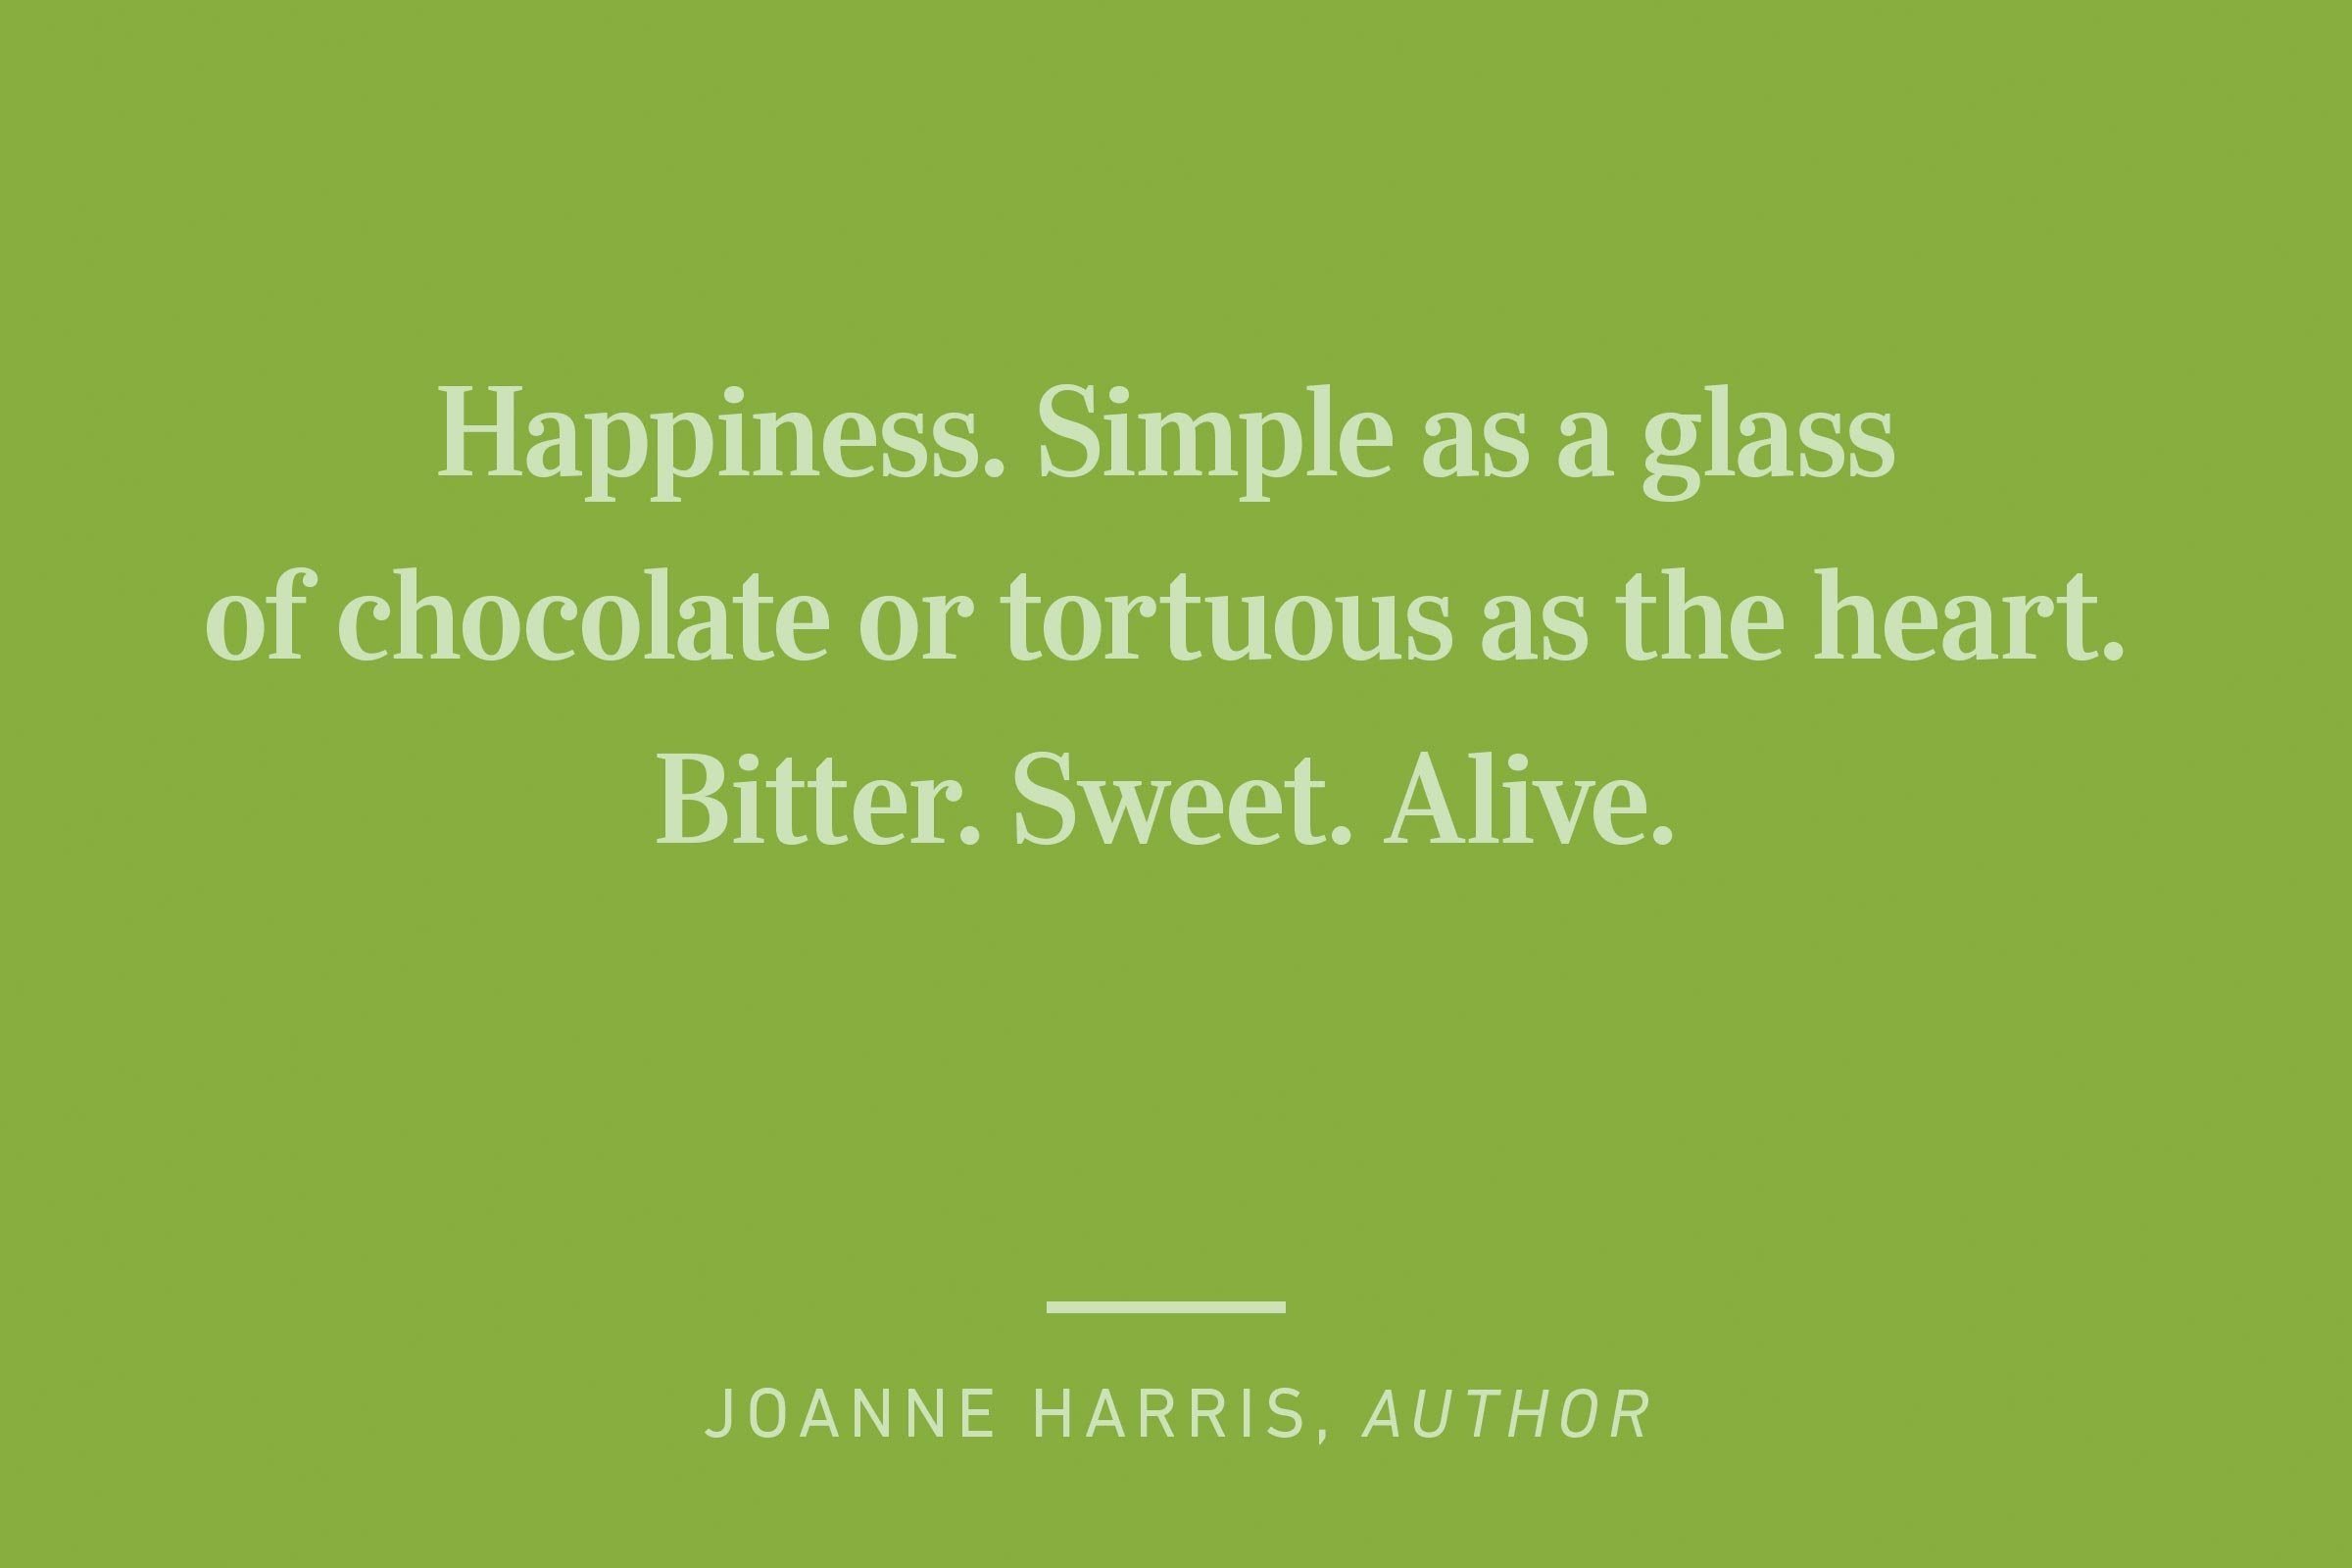 joanne harris happiness quote